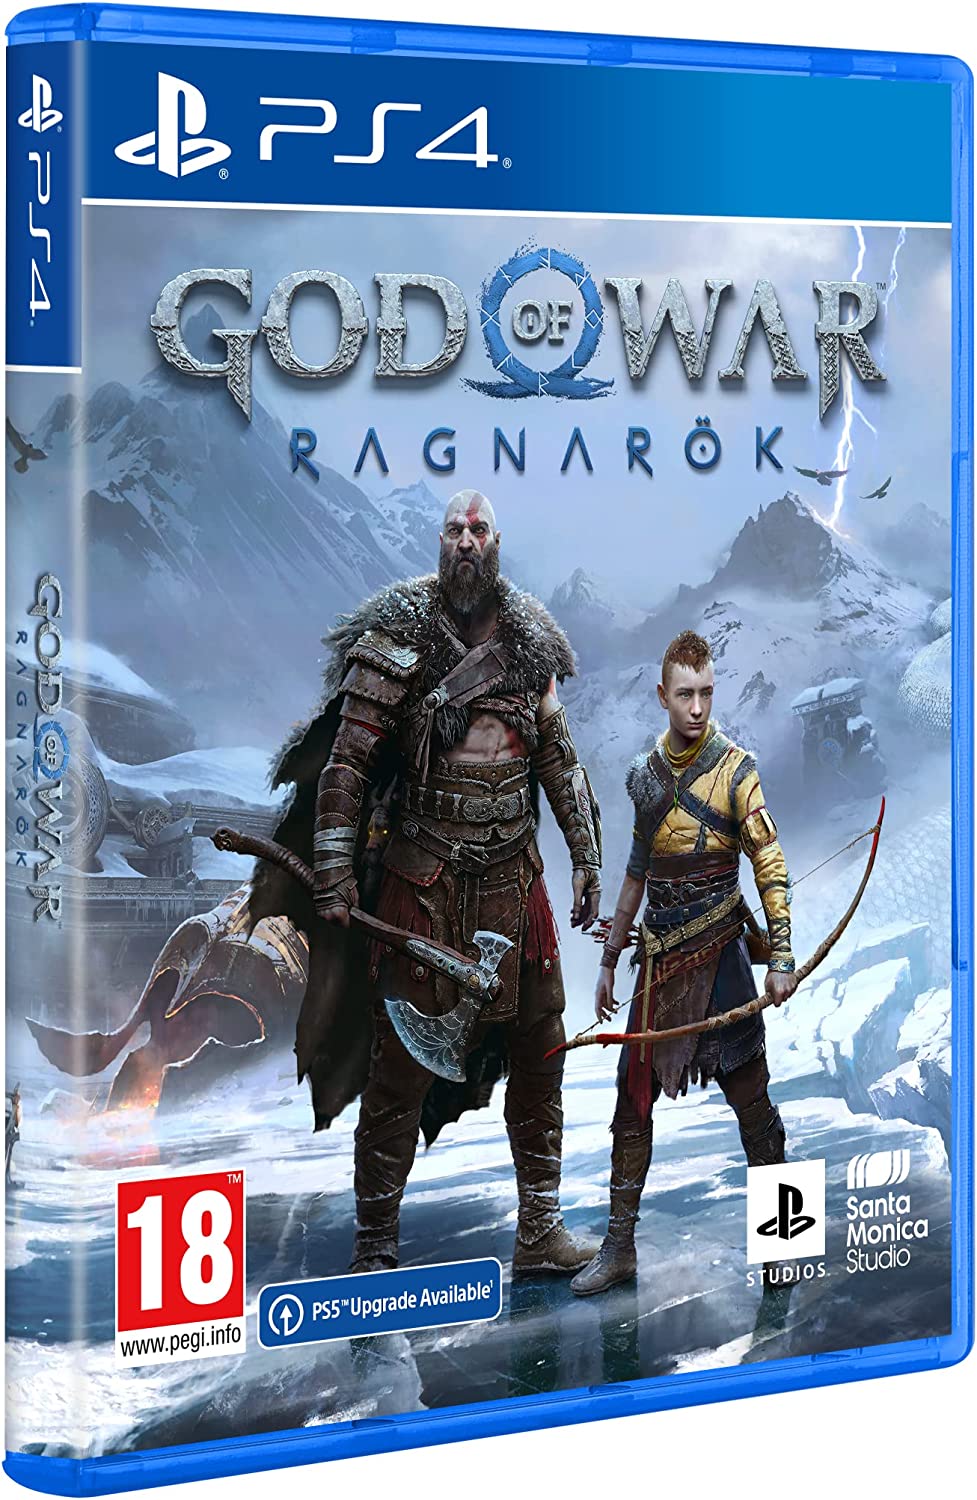 God of War Ragnarok pre-orders are now | VG247